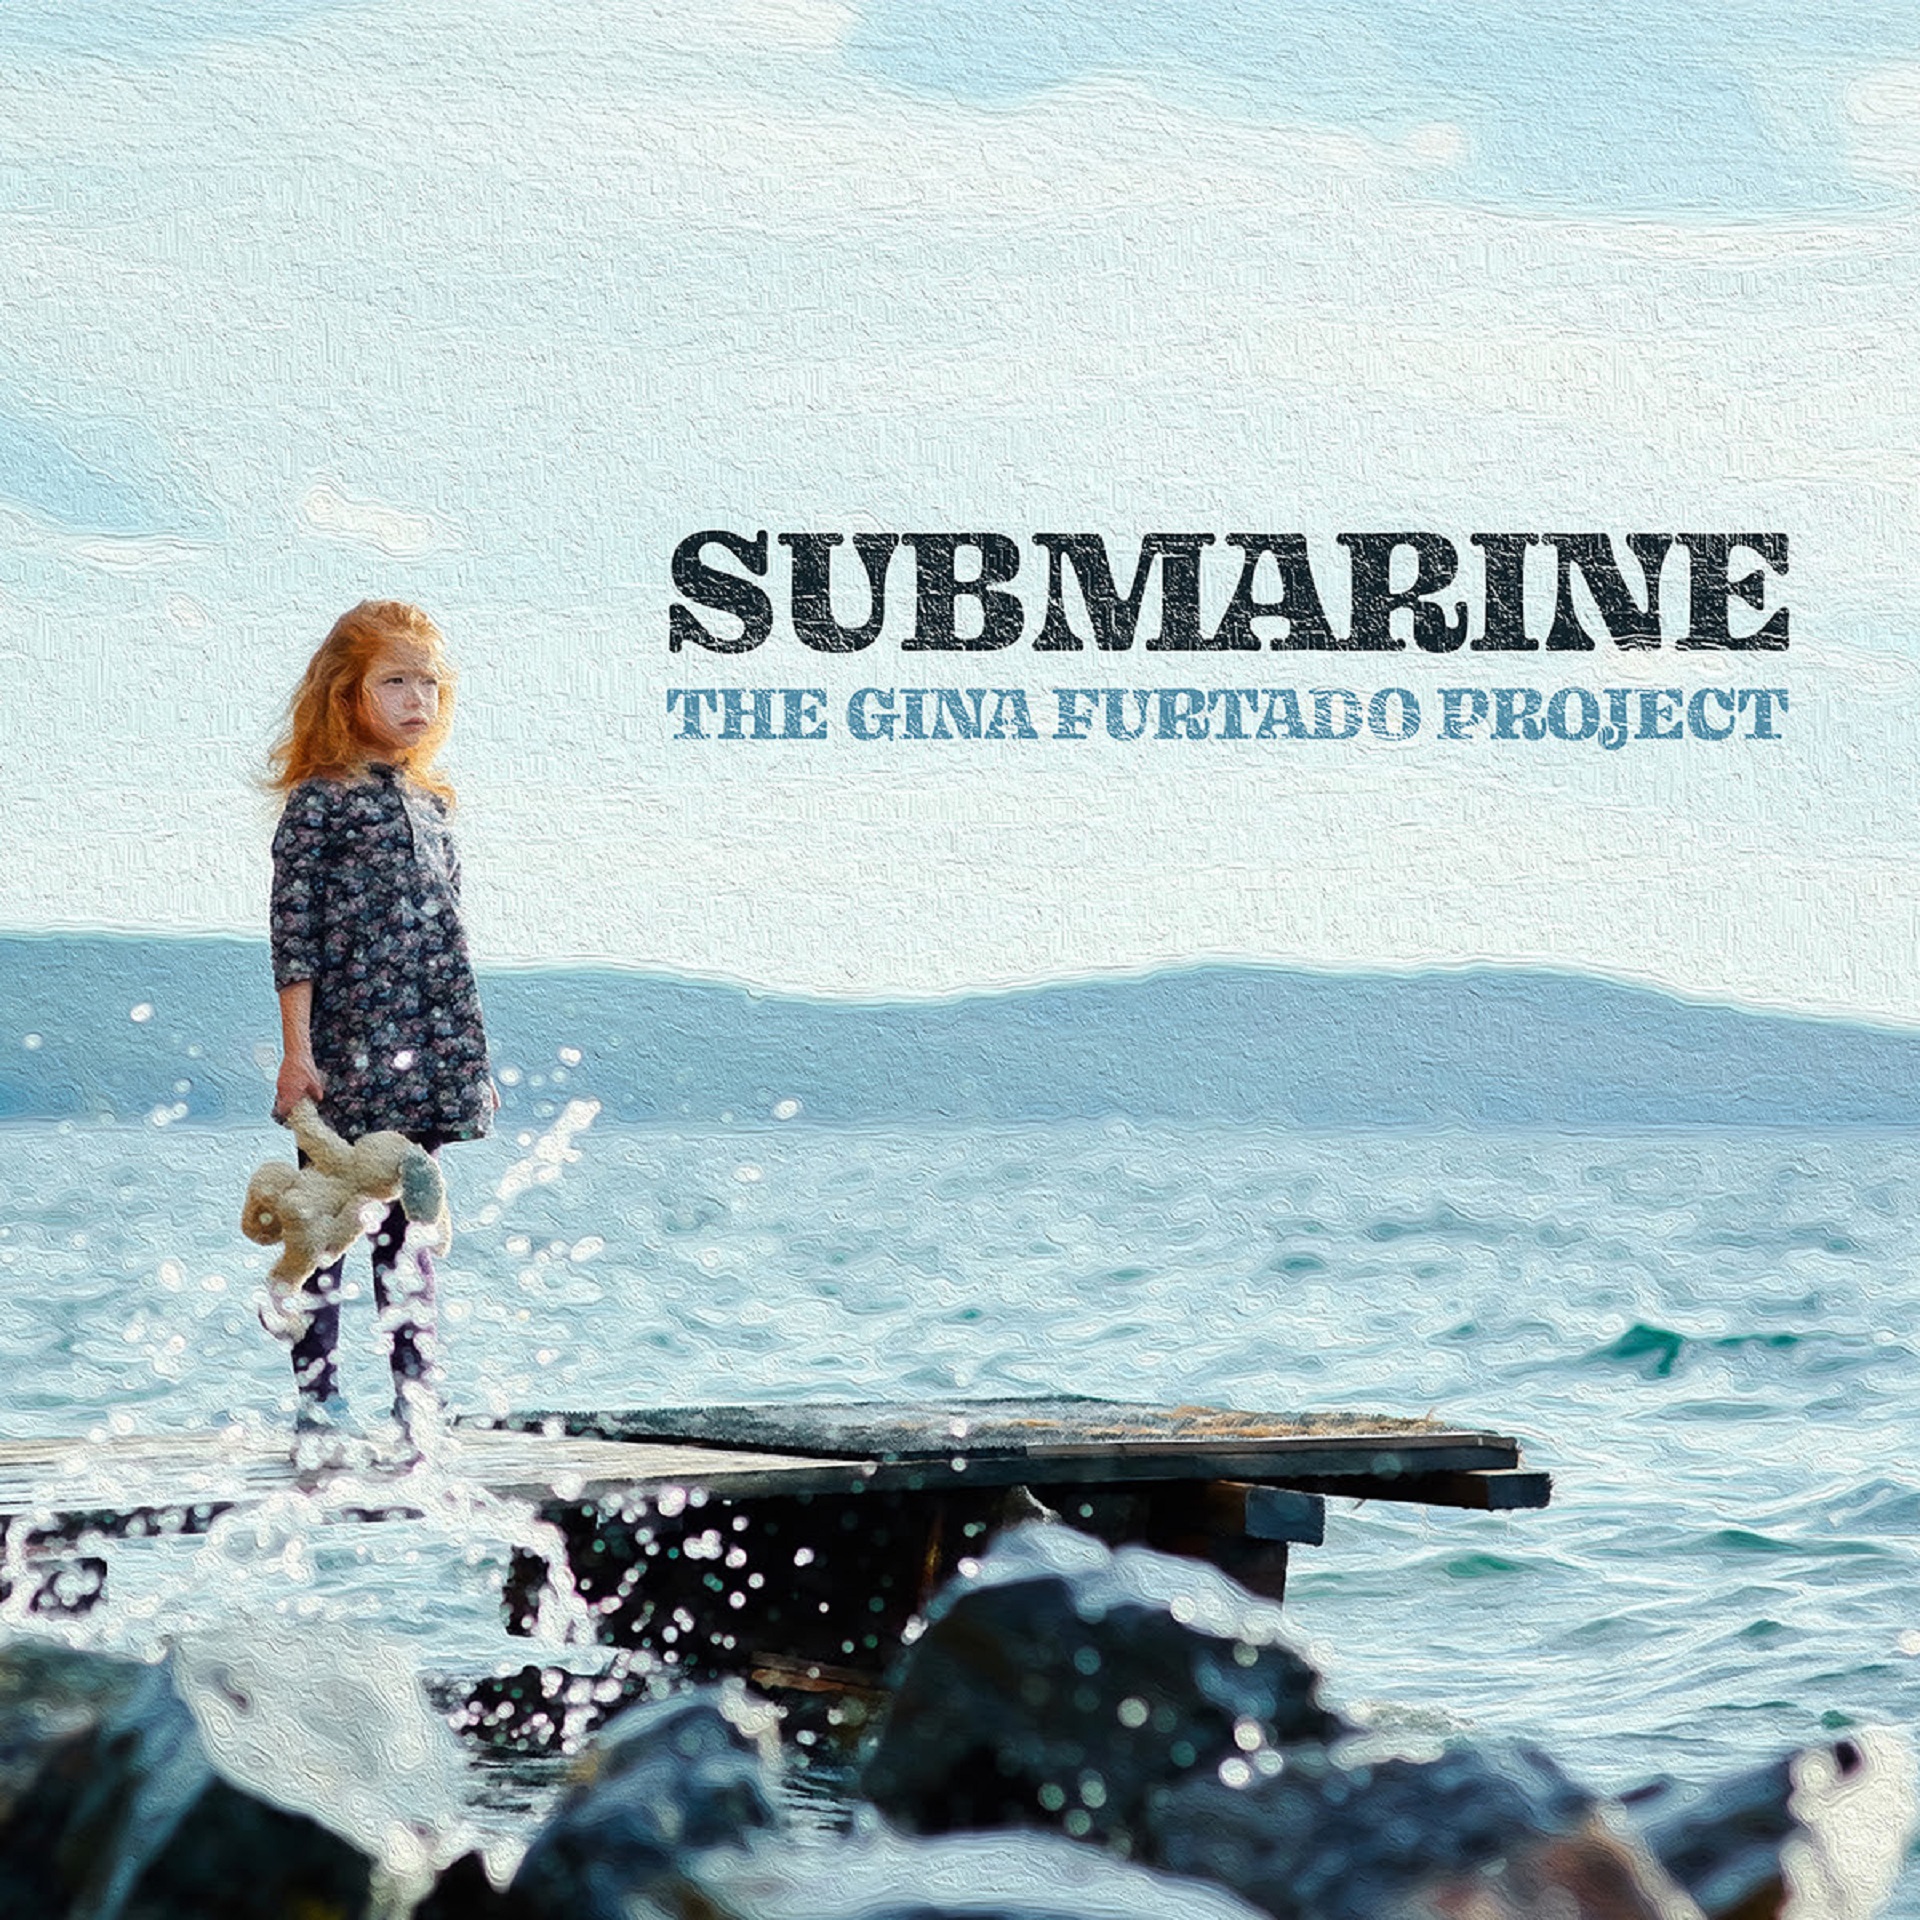 The Gina Furtado Project’s “Submarine” tells of dreams that seem off limits